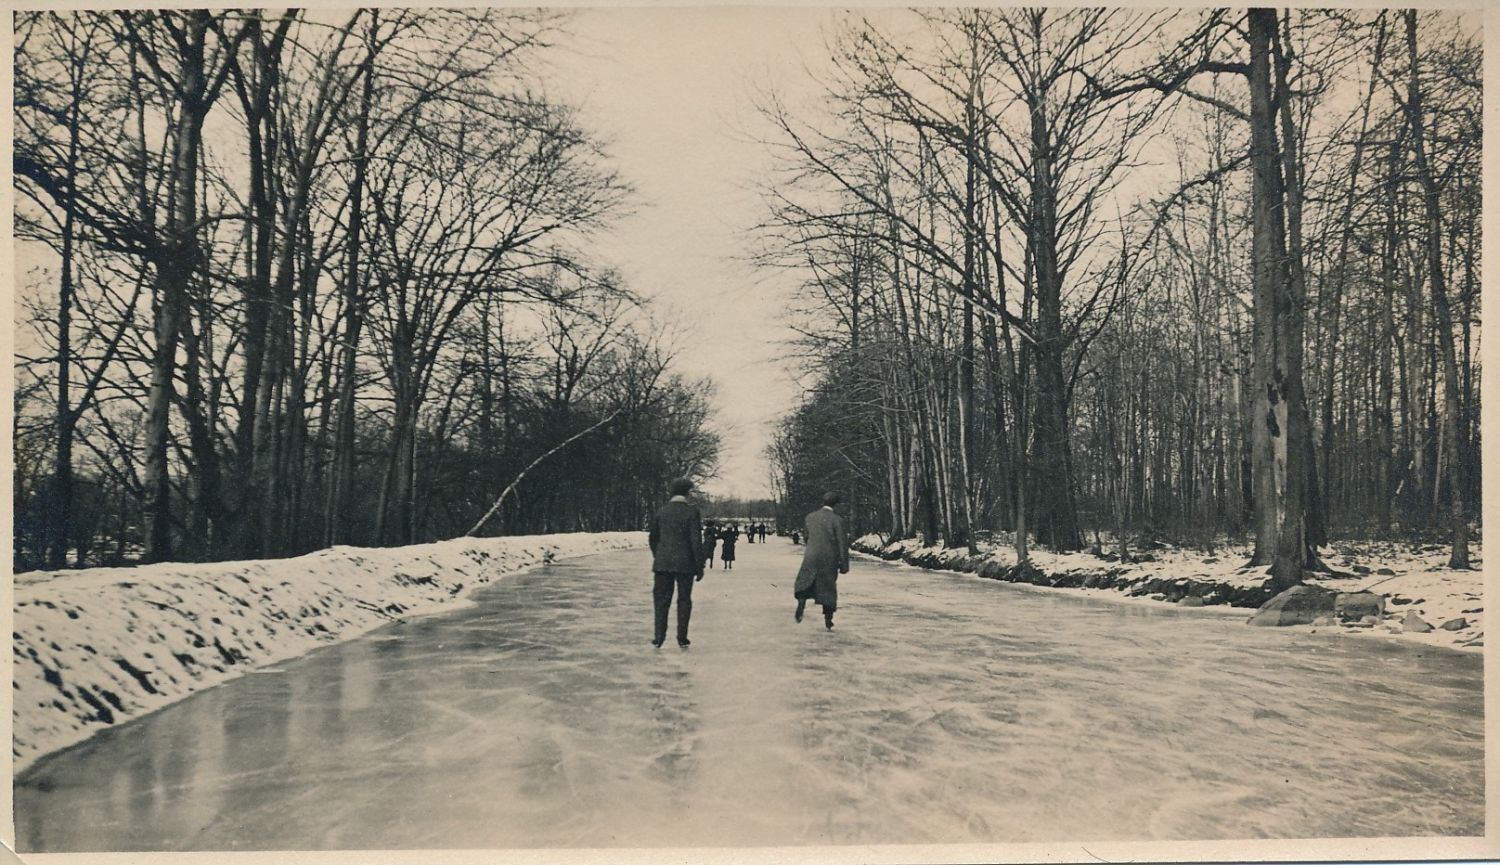 February 9, 1913
Photo form Bill Ridge
